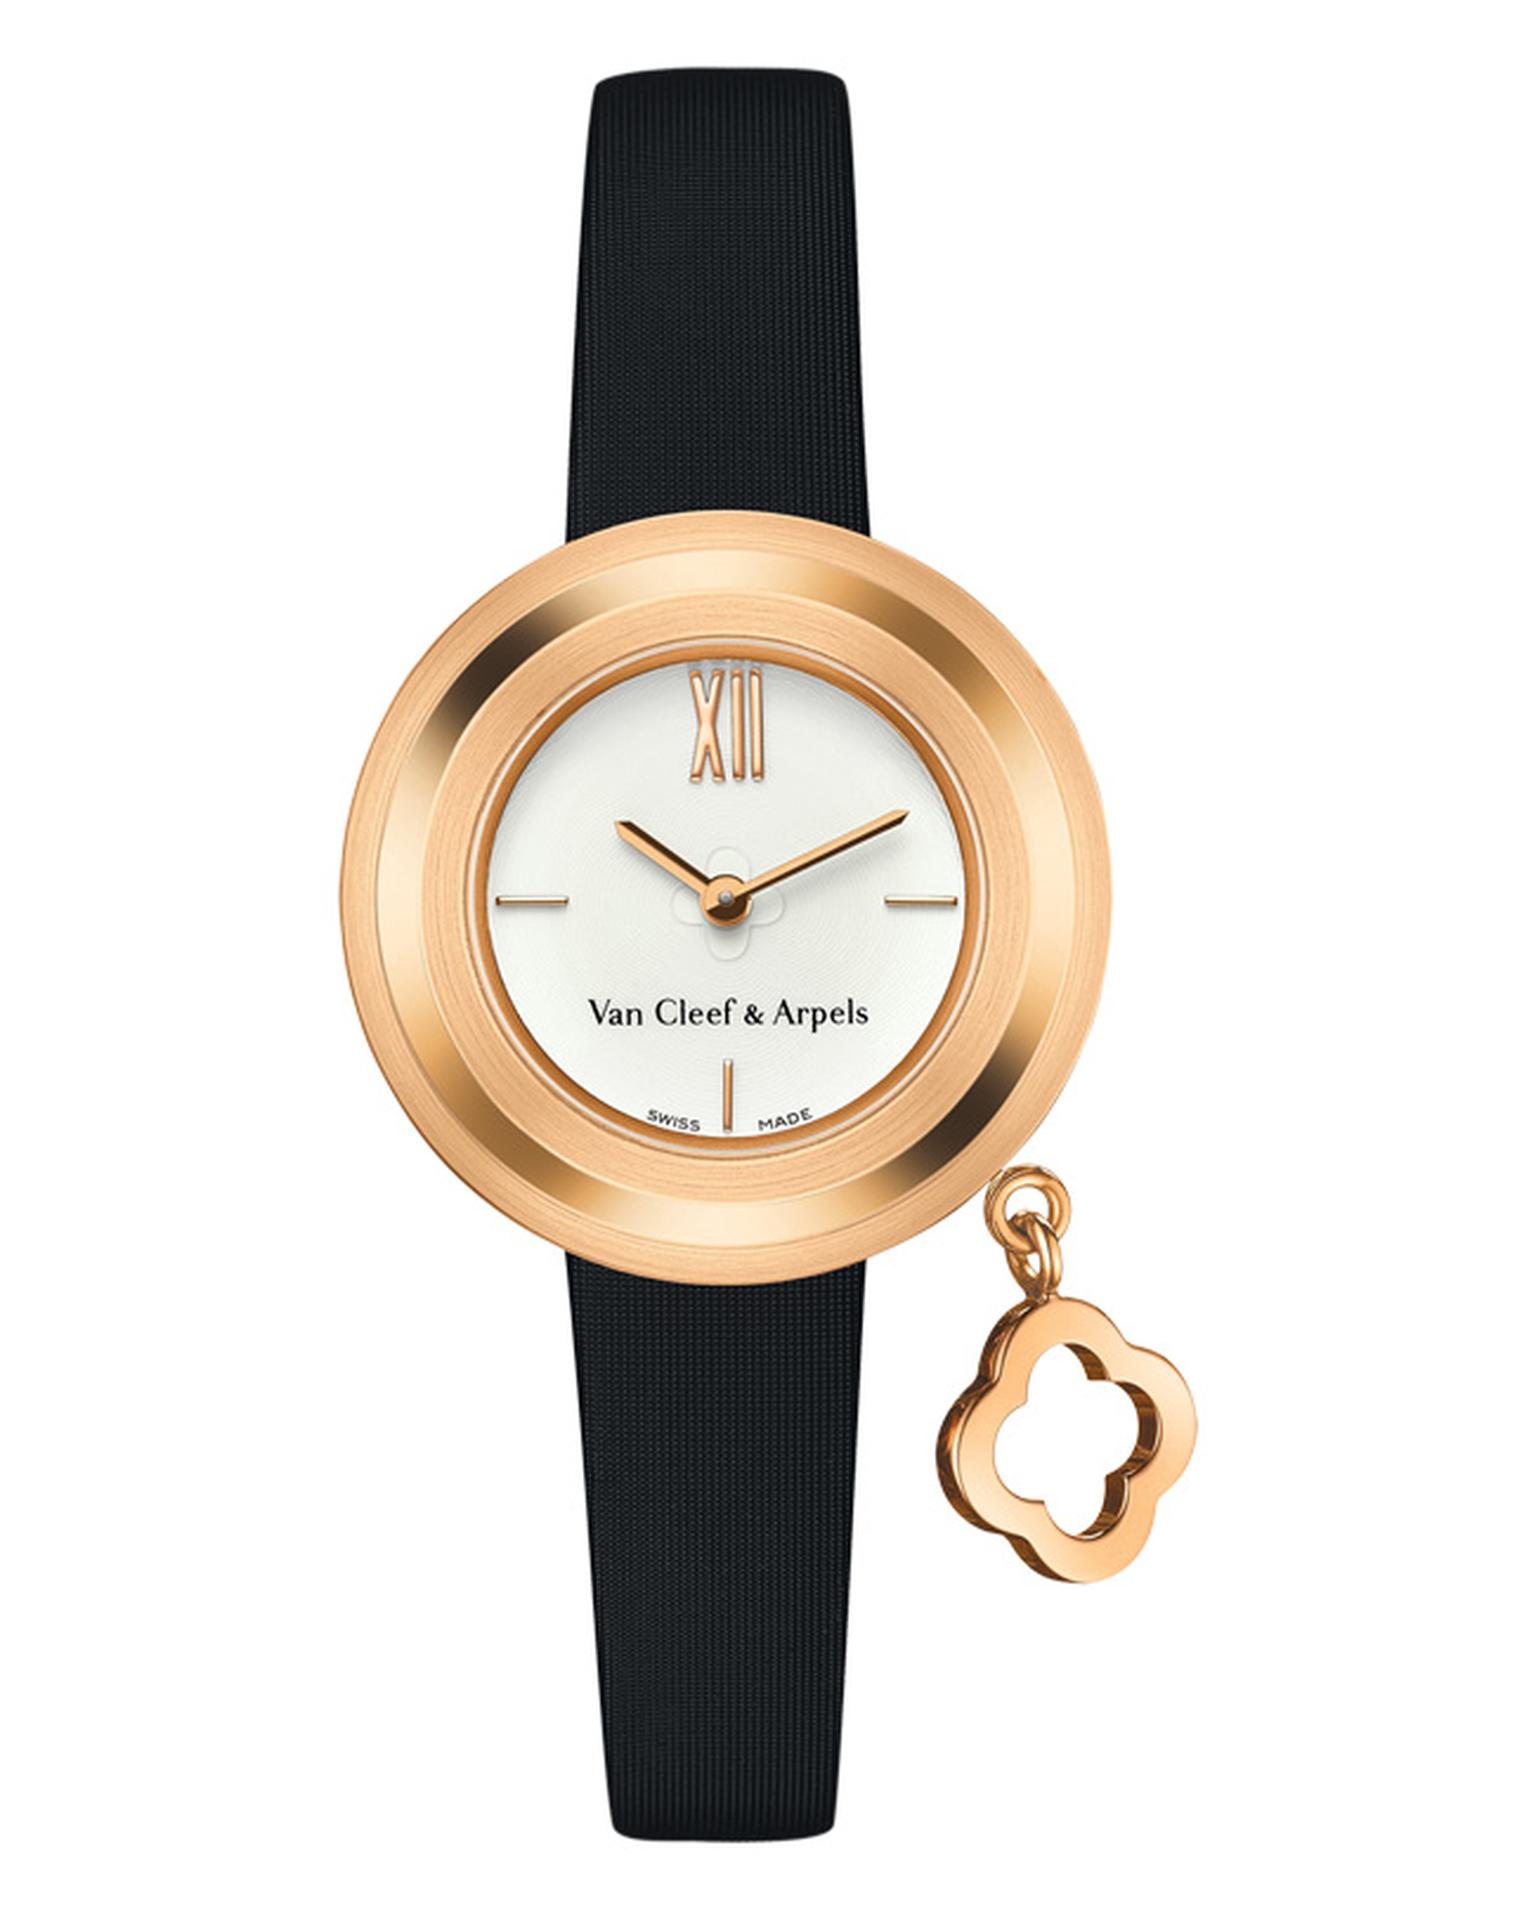 Van-Cleef-&-Arpels-Charms-Gold-Mini-watch_20140312_Main